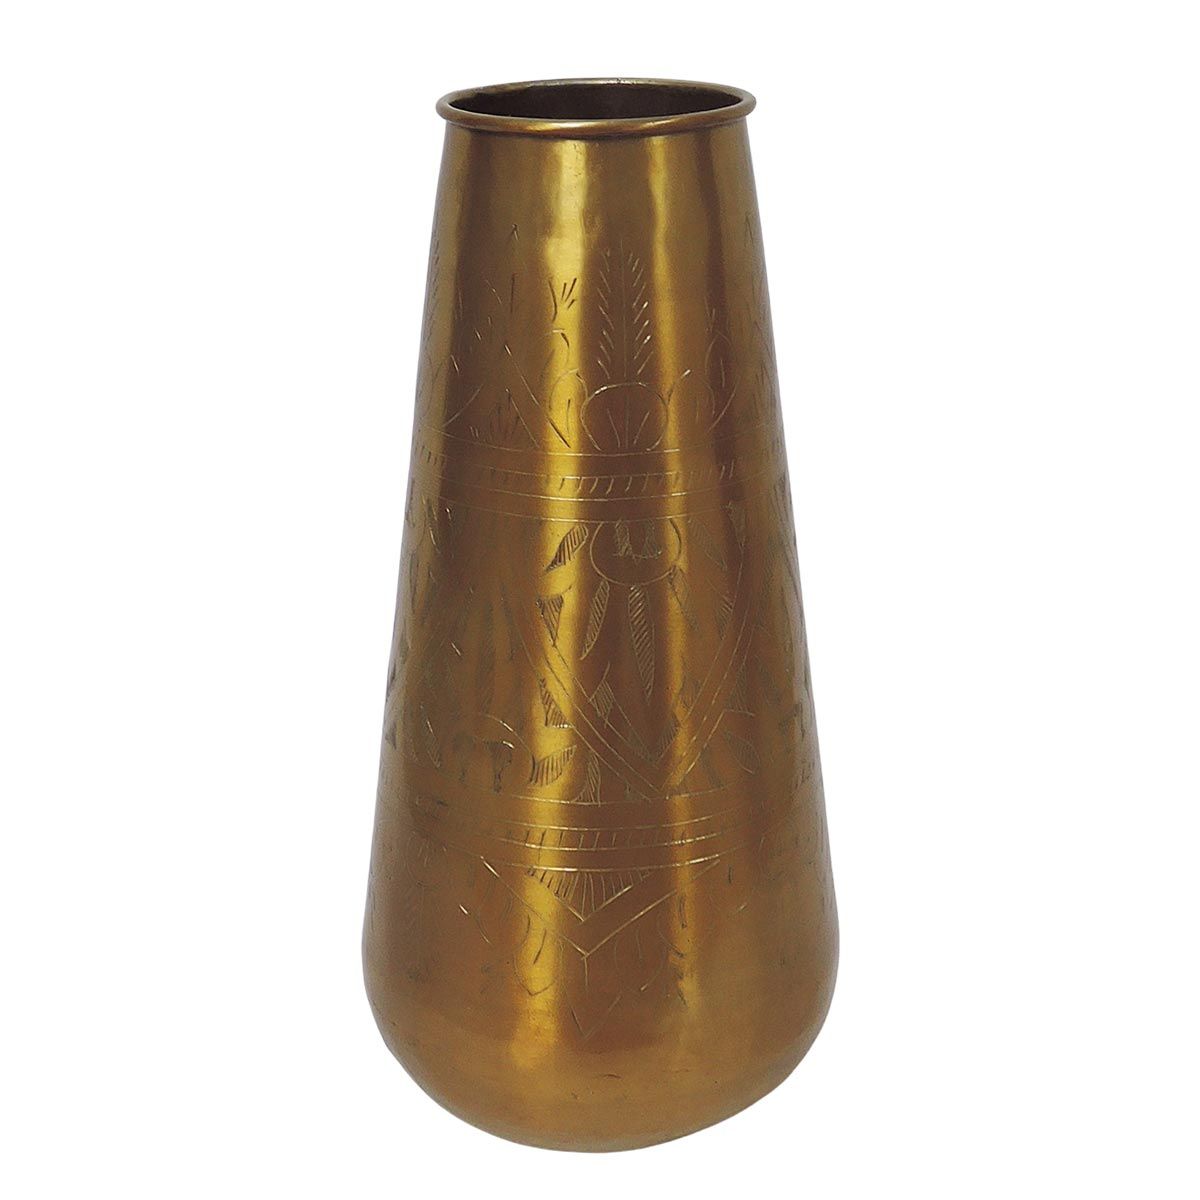 Vase cylindrique aluminium motifs or